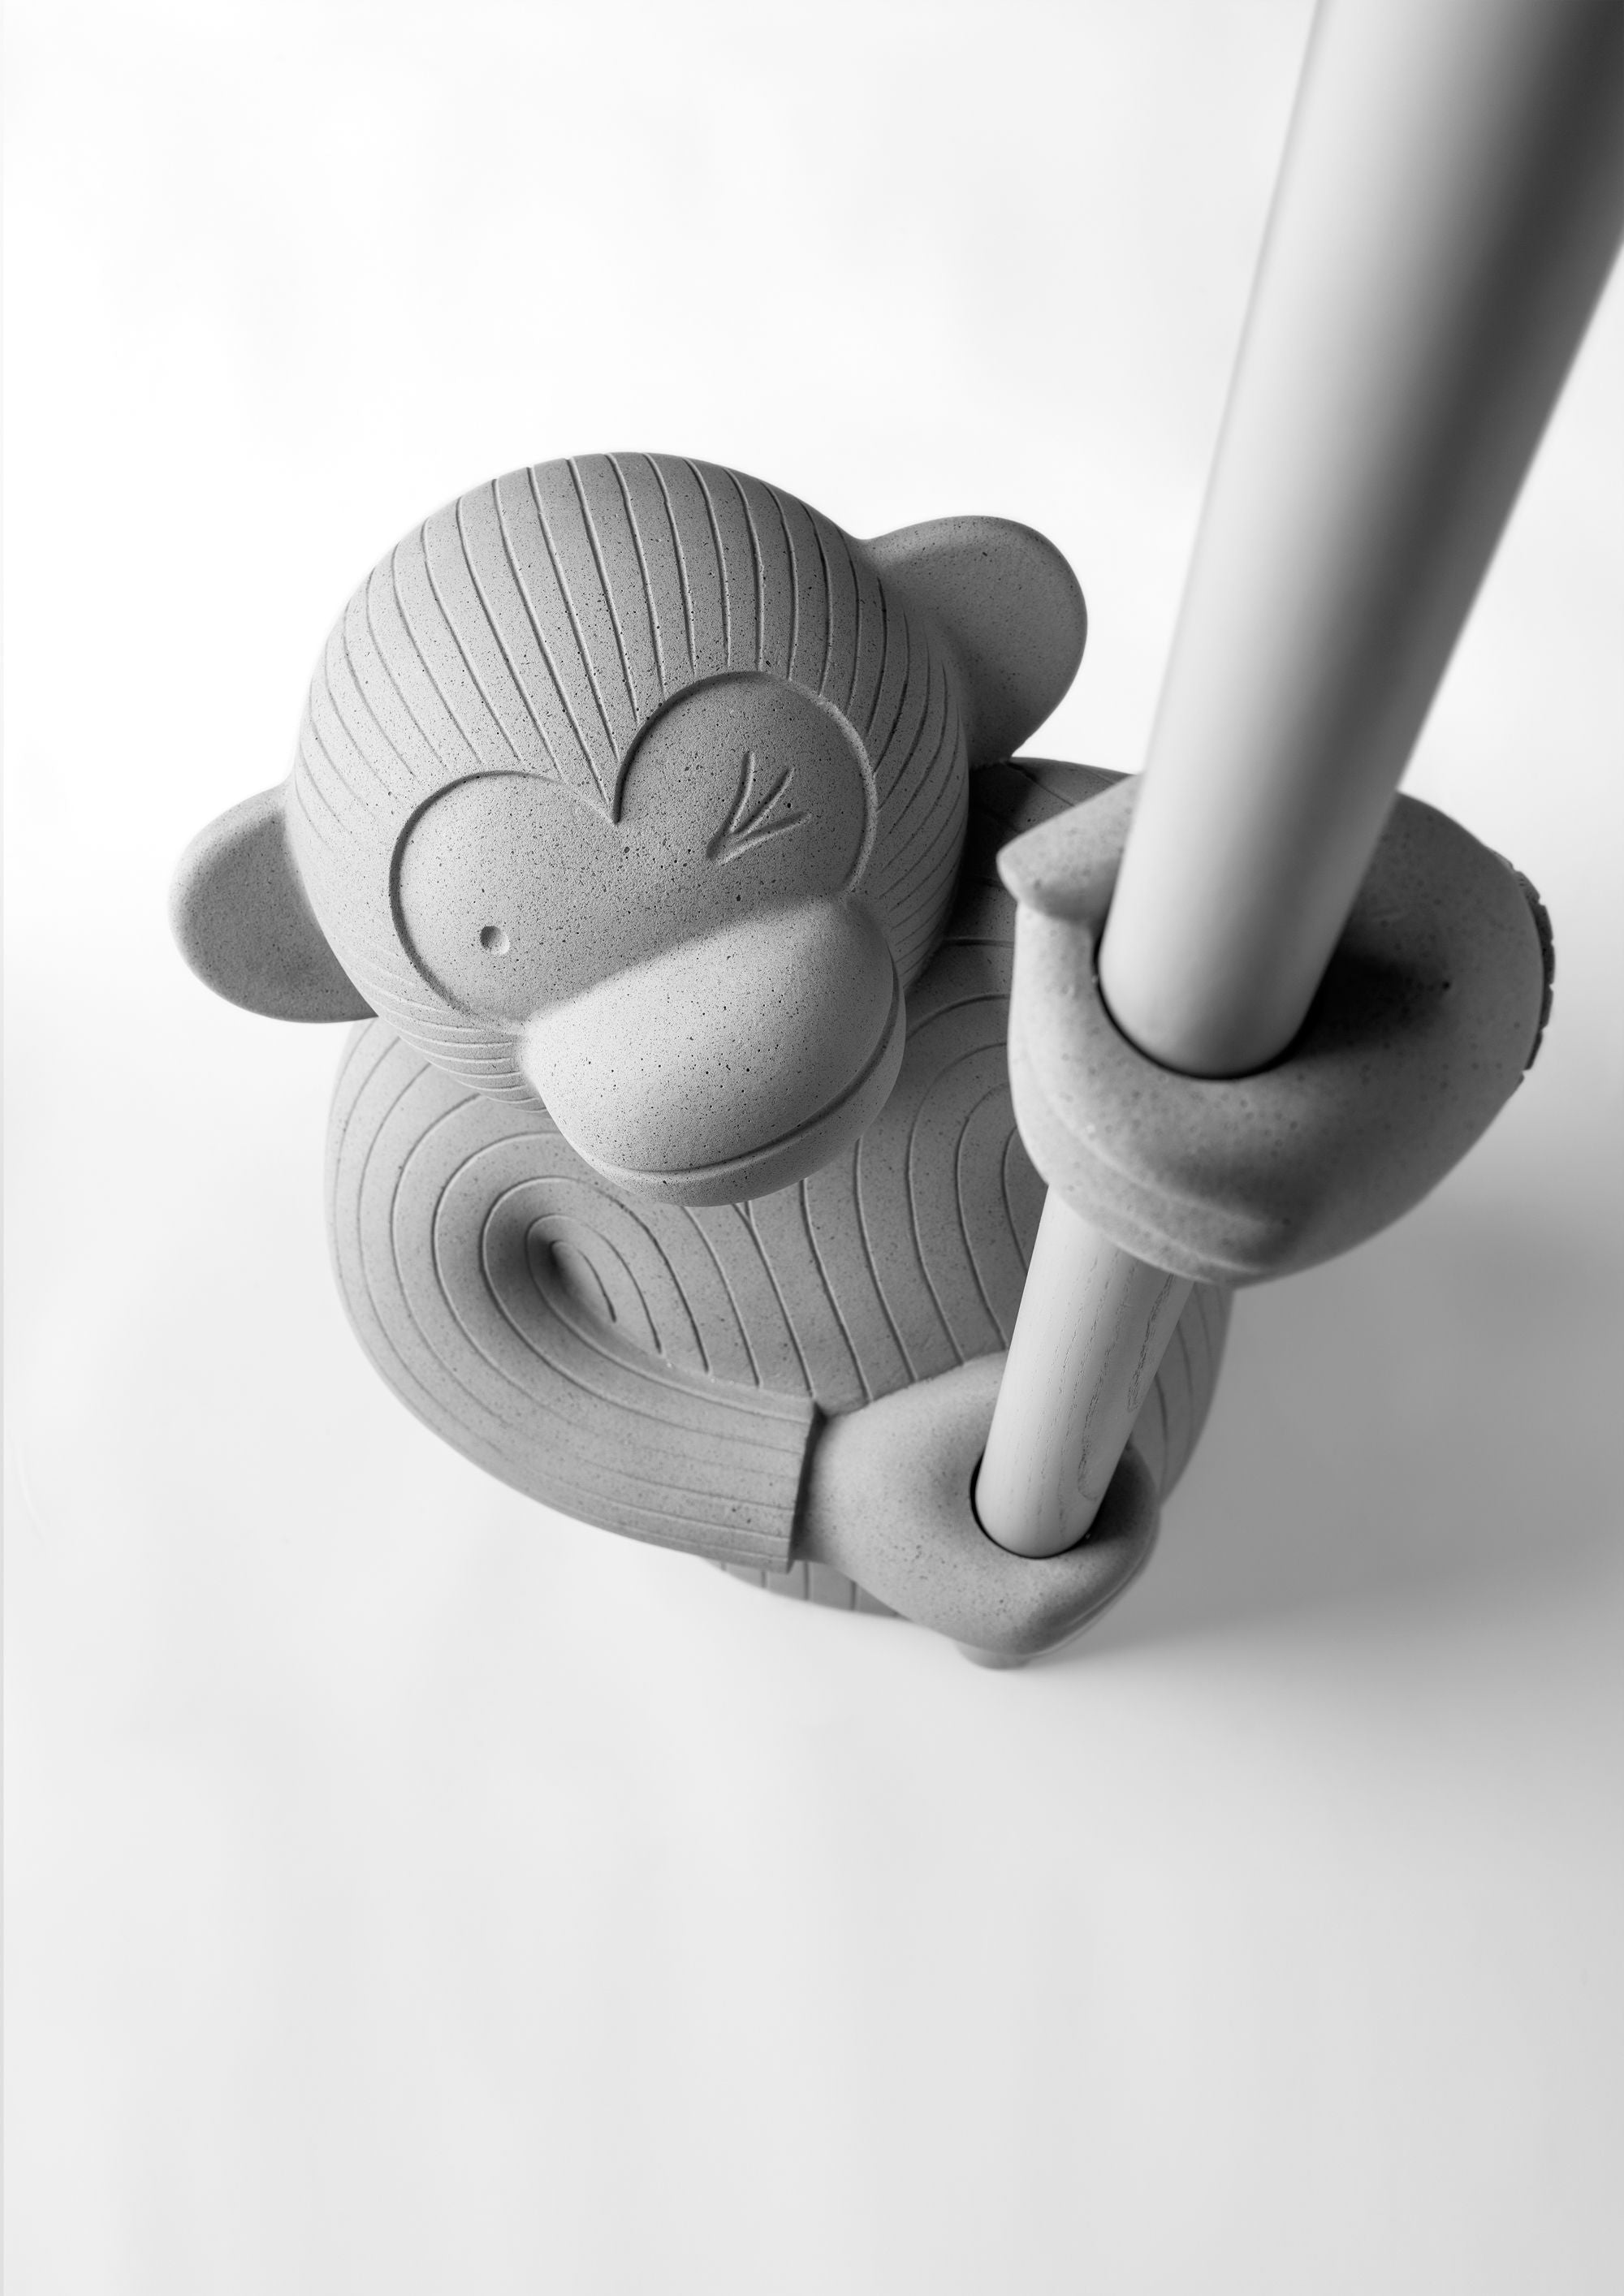 Coat stand monkey by Jaime Hayon Wall banana